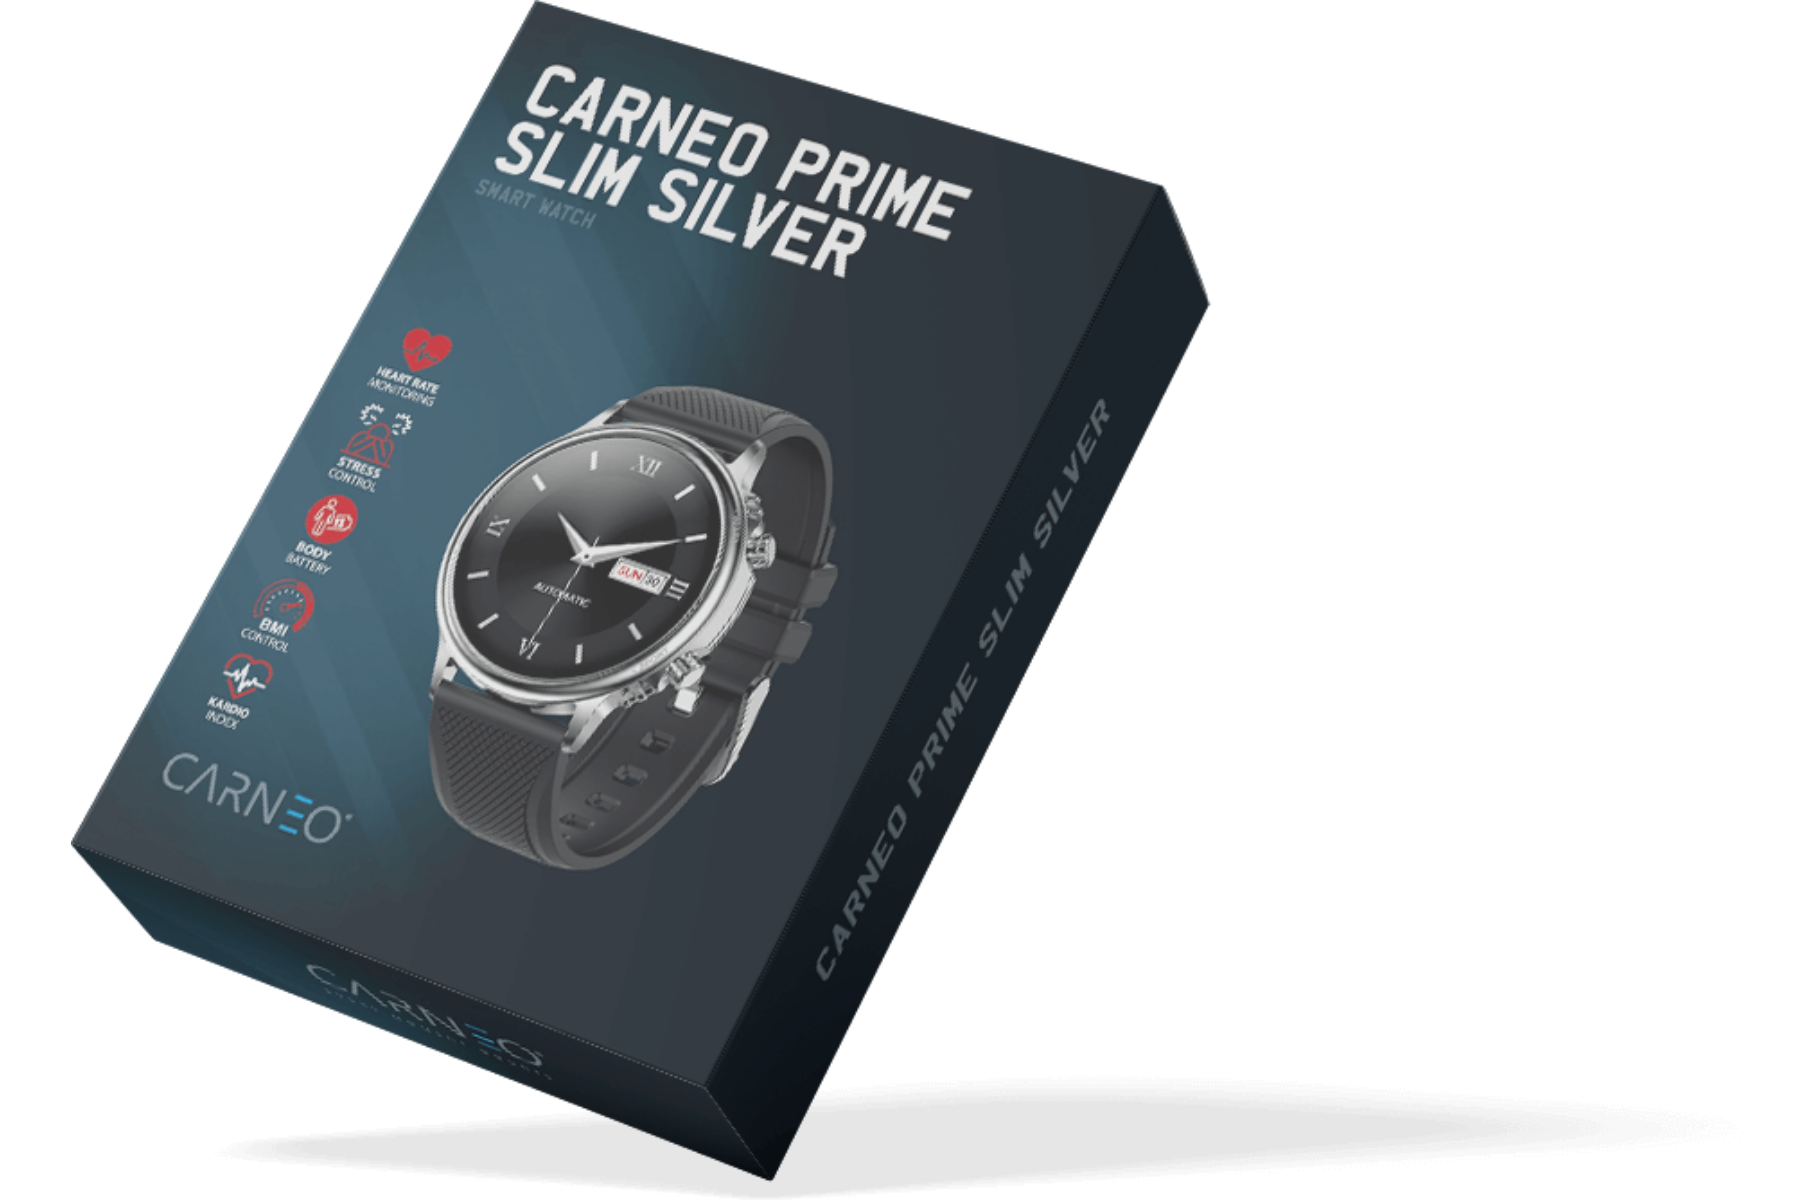 Smart hodinky Carneo Prime Slim Gold uvod